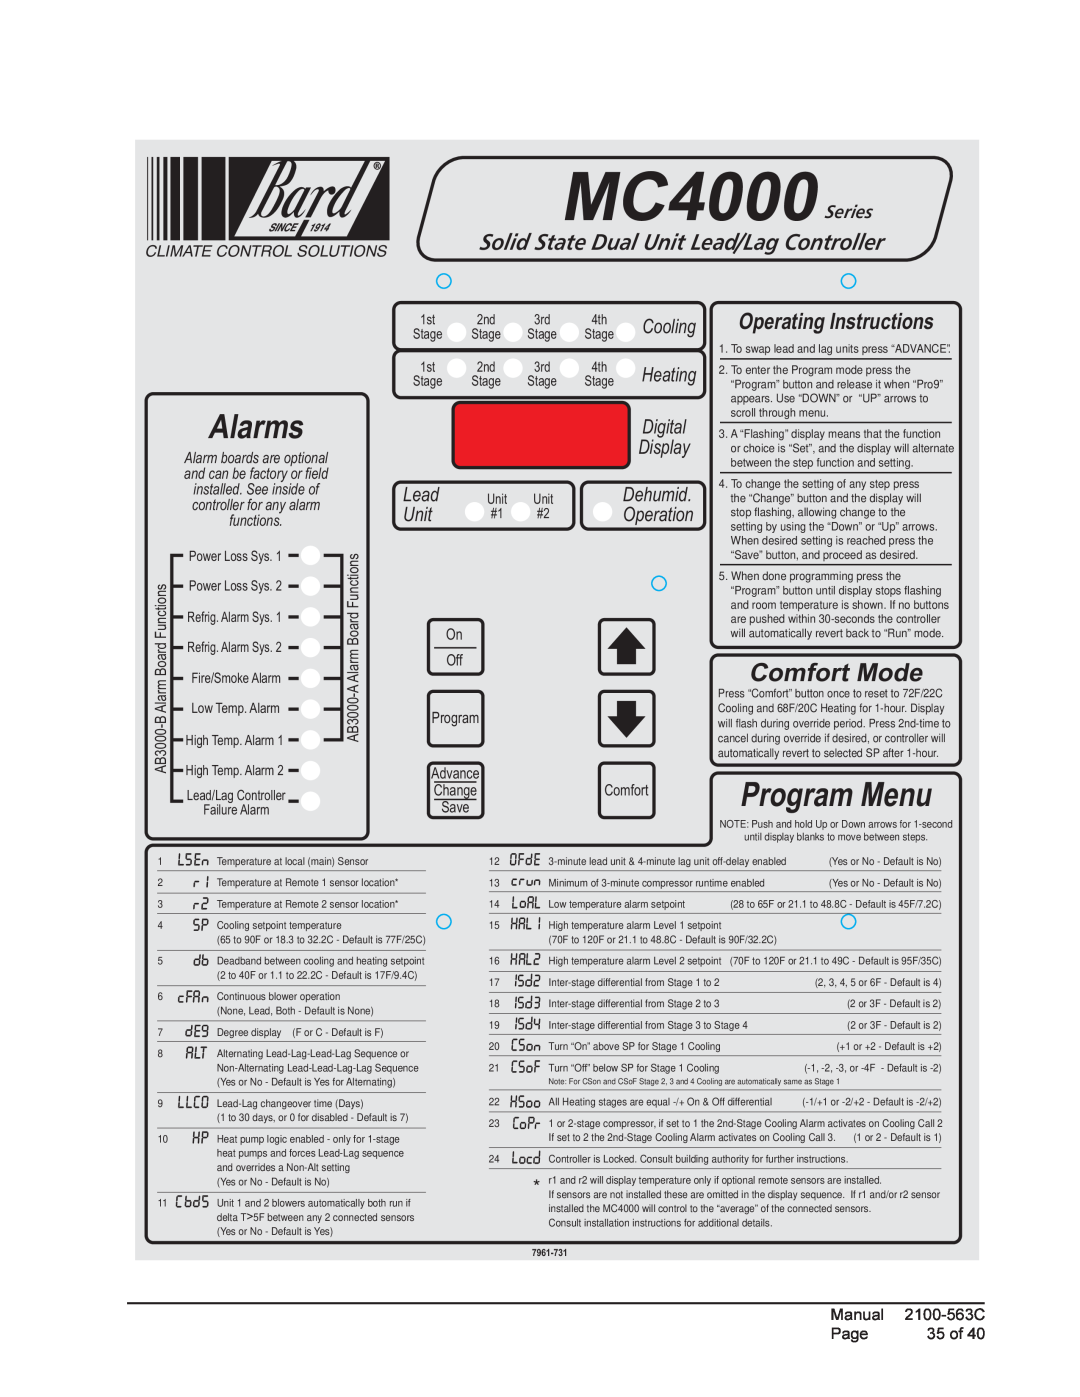 Bard MC4000Series, Alarms, Program Menu, Comfort Mode, Solid State Dual Unit LeadLag Controller, Operating Instructions 